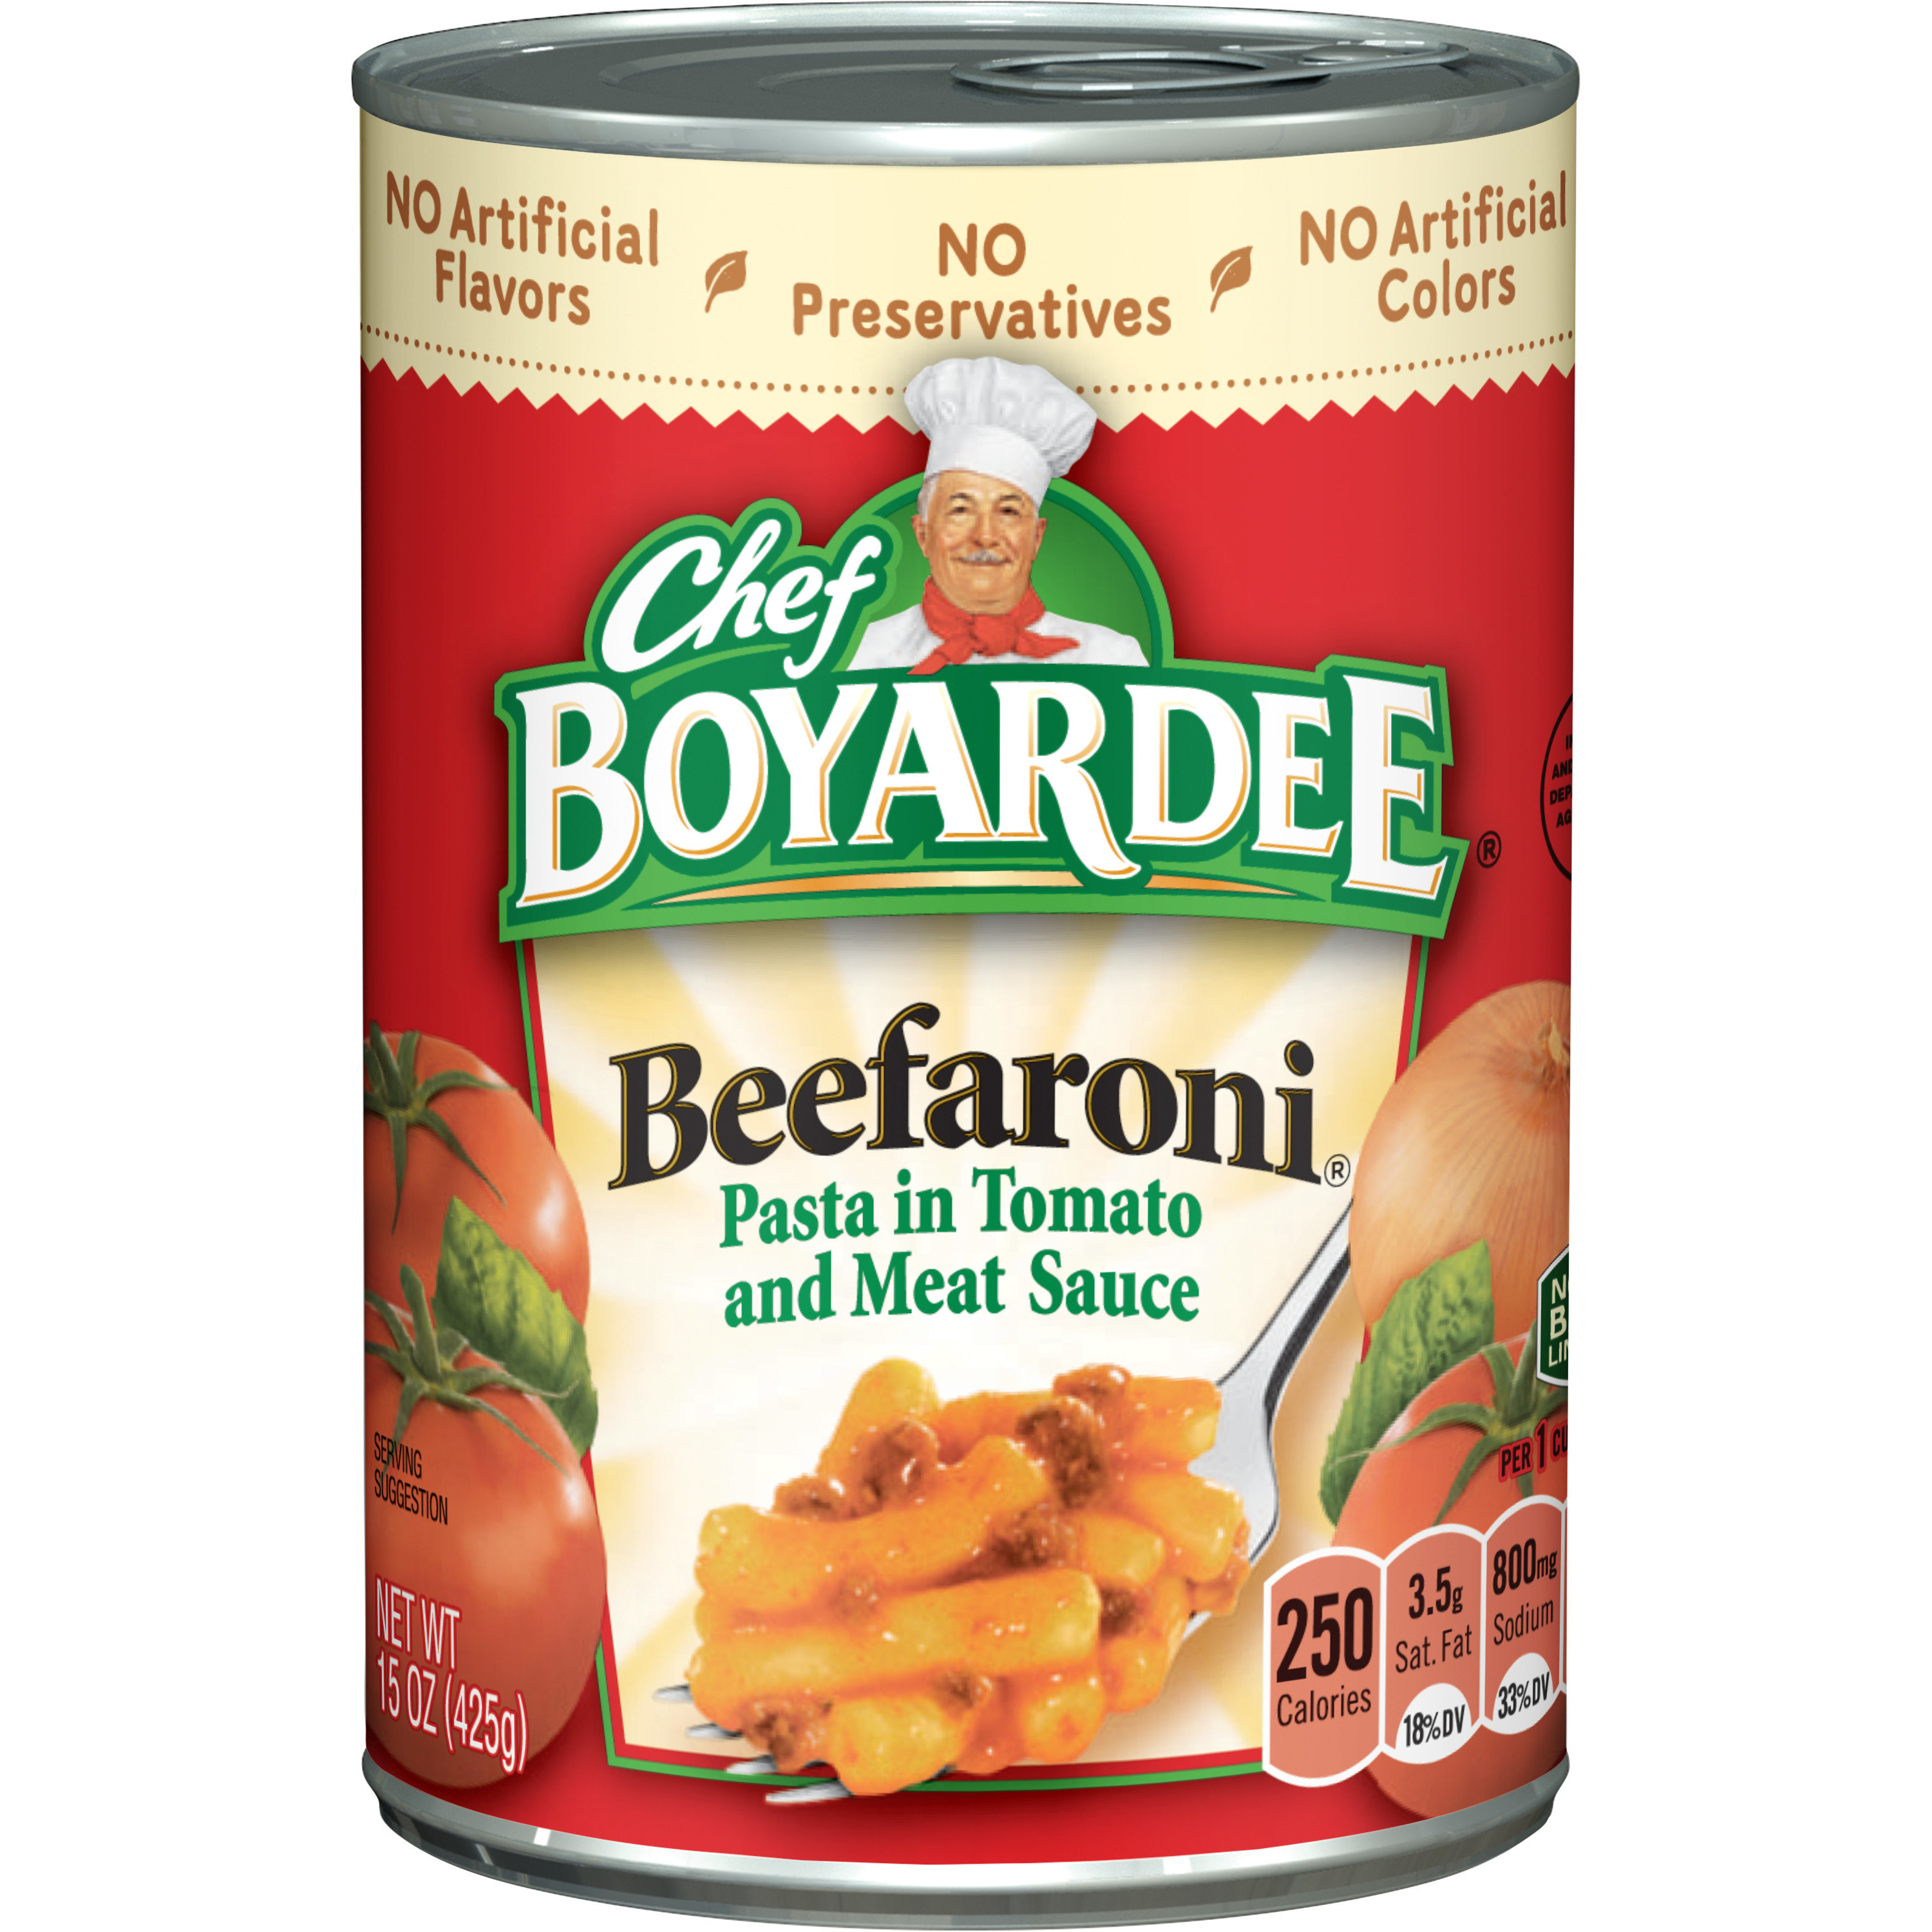 A can of Chef Boyardee Beefaroni.